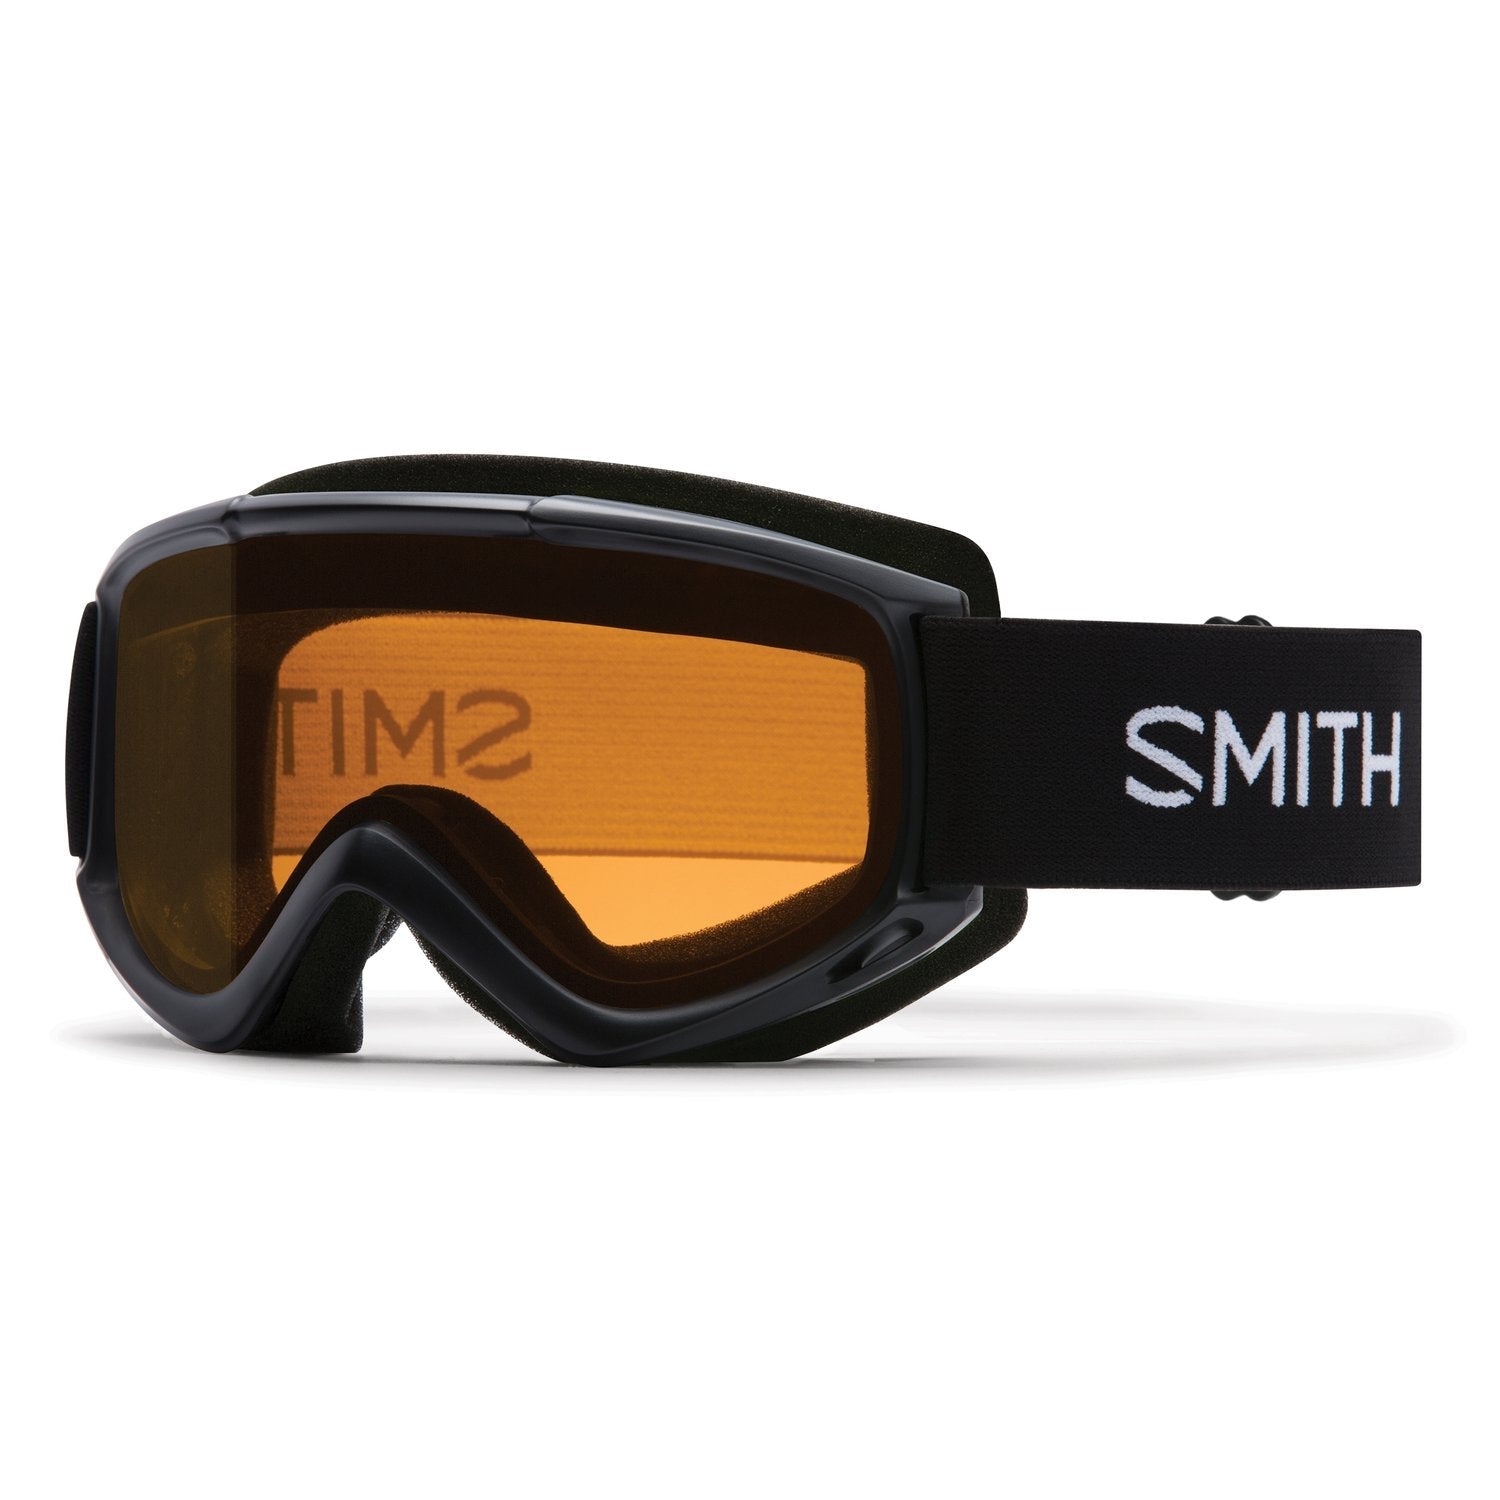 Smith Cascade Classic Snow Goggle - OpenBox Default Title - Smith Snow Goggles